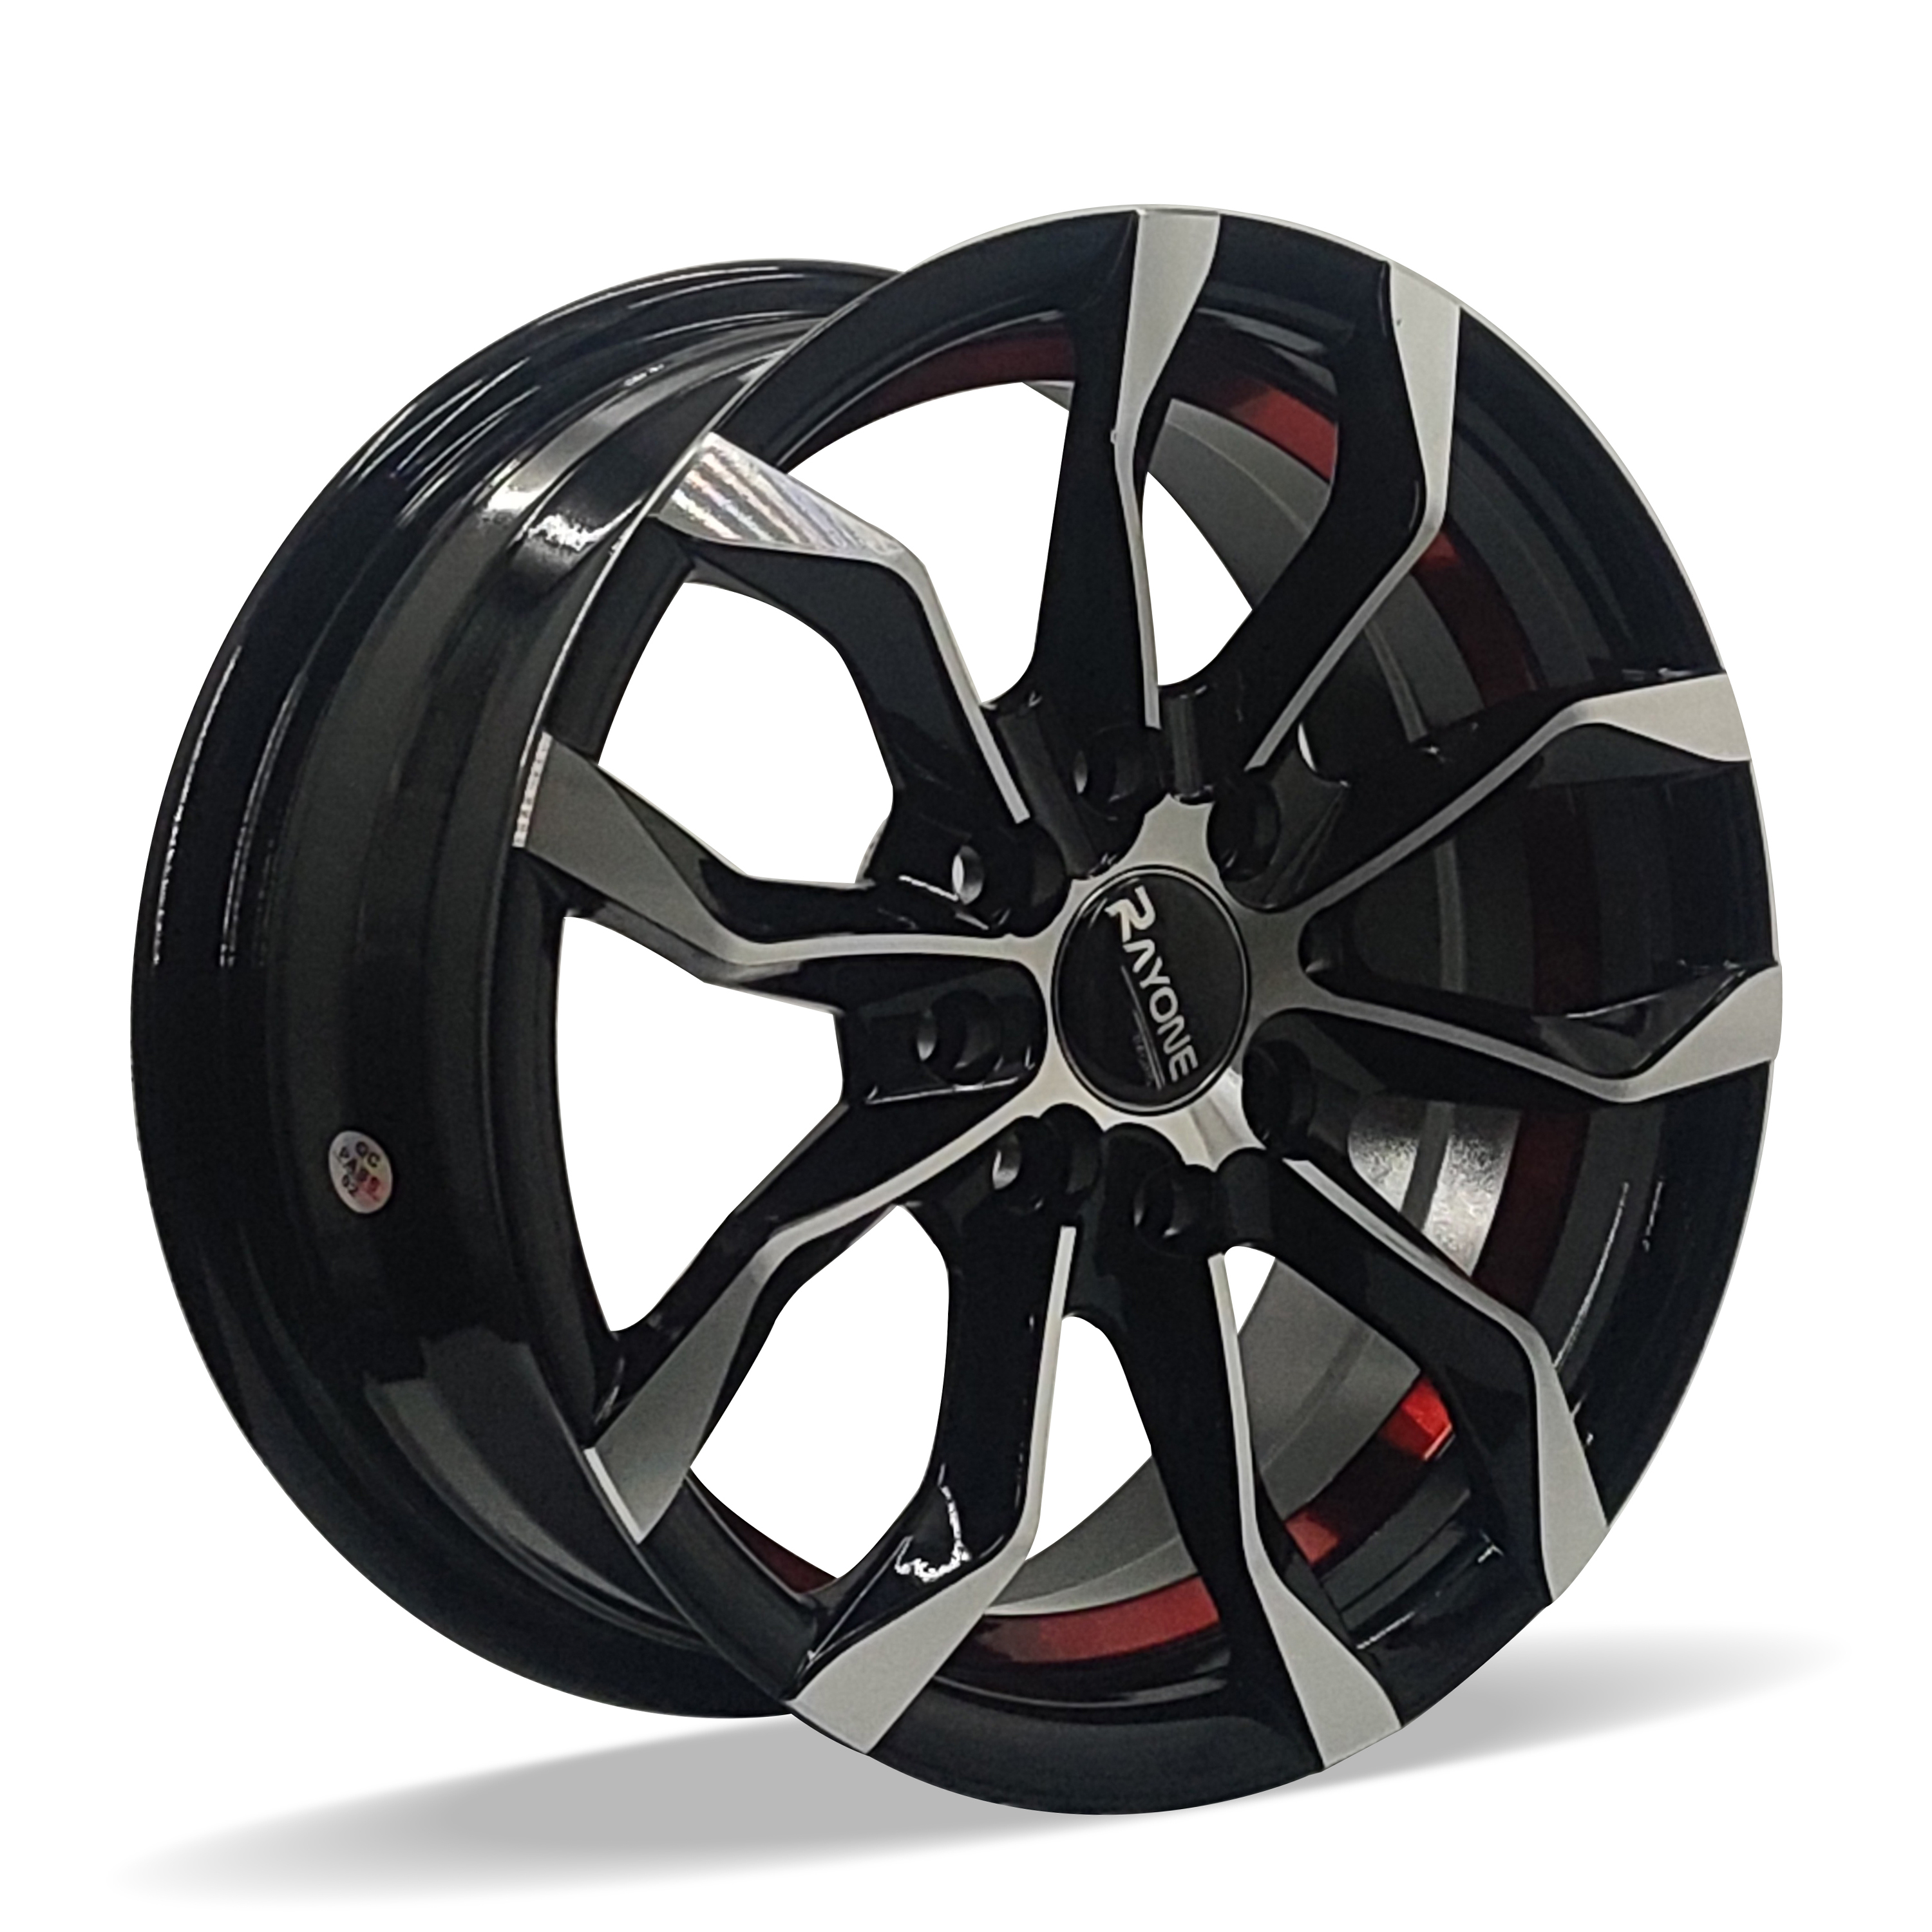 Performance Wheels Wholesale 14/15/16/17Inch Aluminum Alloy Wheel Rims For Passenger Cars